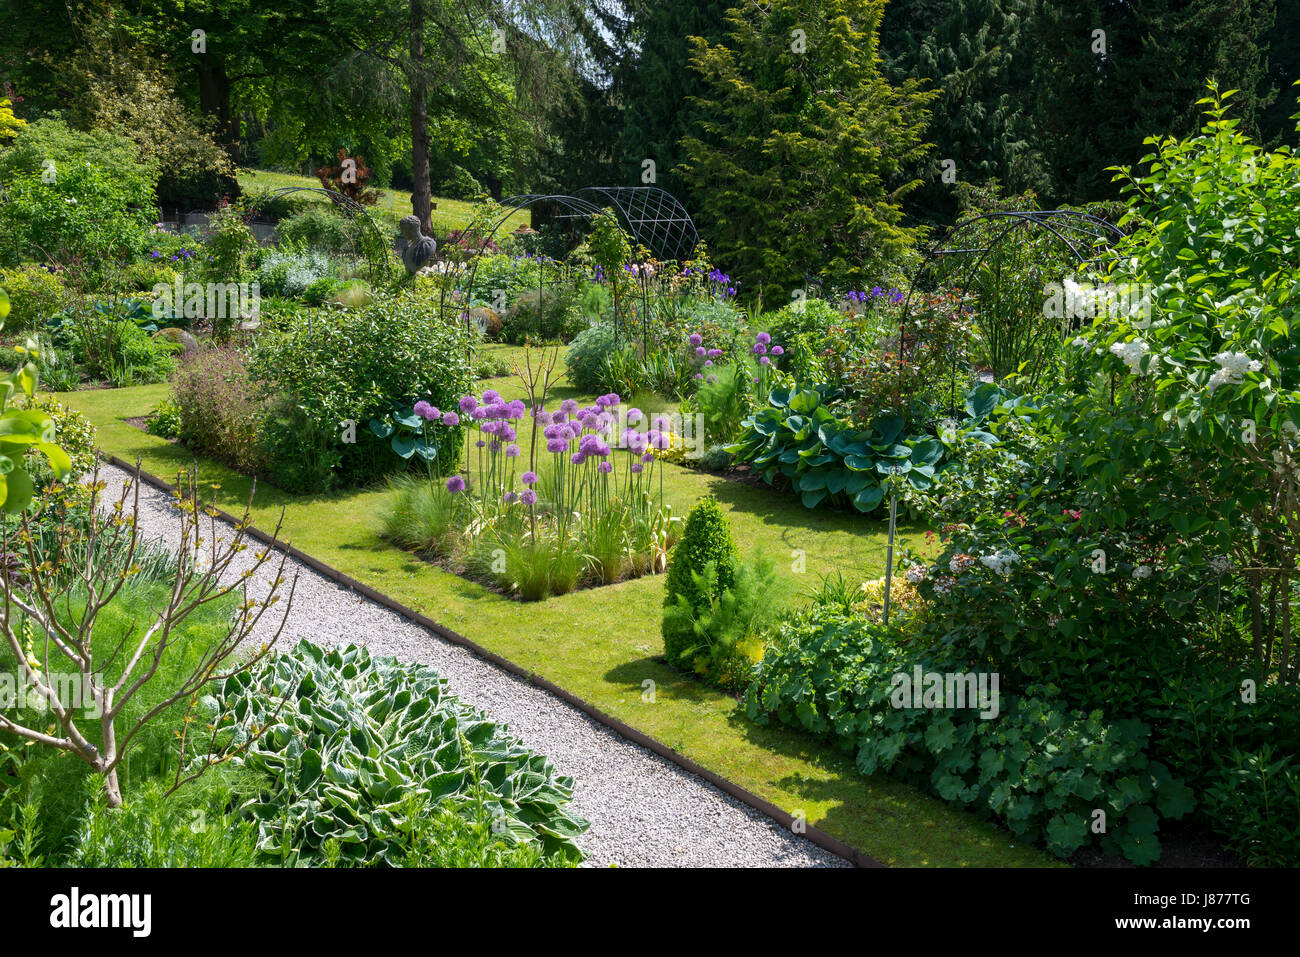 The scented terrace at Thornbridge hall gardens near Great Longstone, Derbyshire, England. Stock Photo